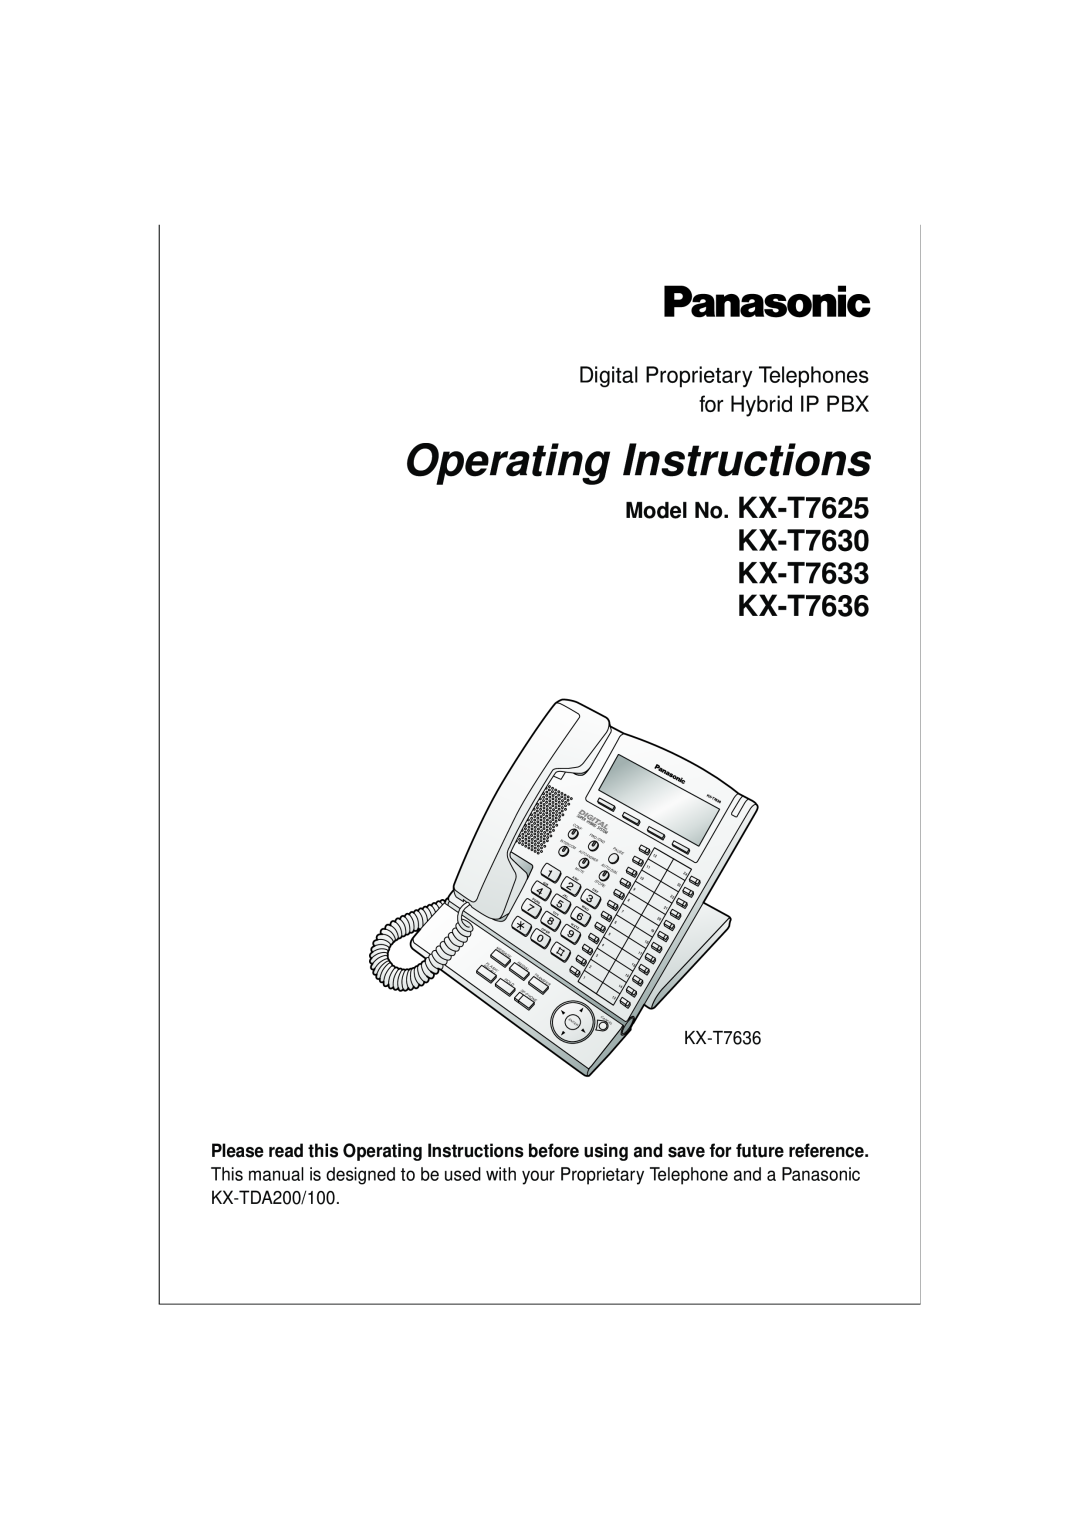 Panasonic operating instructions Operating Instructions, KX-T7630 KX-T7633 KX-T7636, Model No. KX-T7625, Conf, Auto 